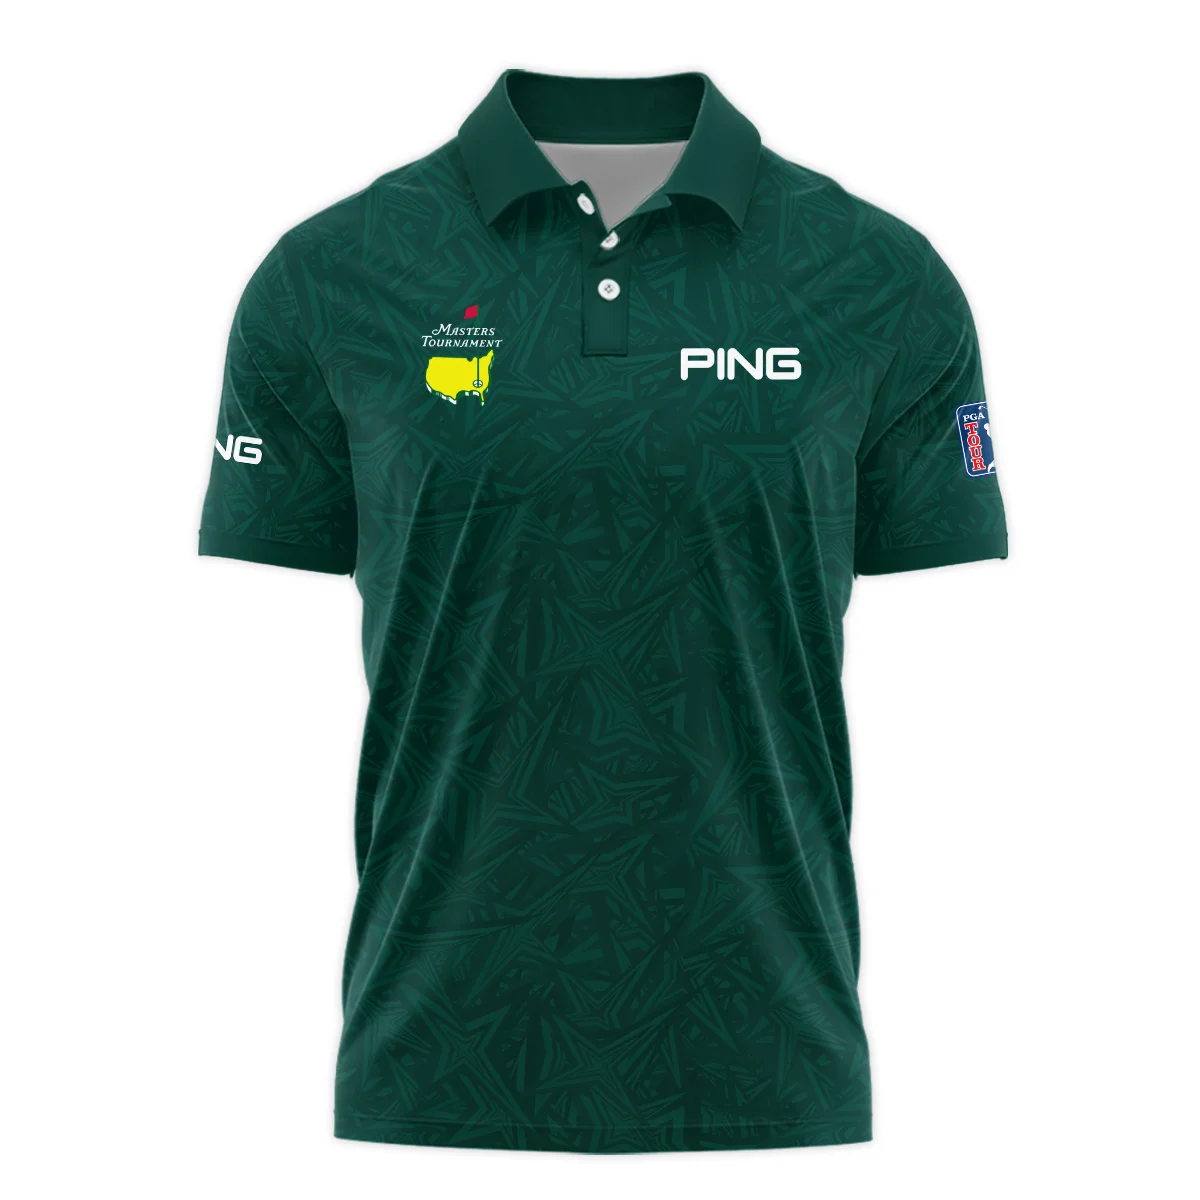 Stars Dark Green Abstract Sport Masters Tournament Ping Unisex T-Shirt Style Classic T-Shirt